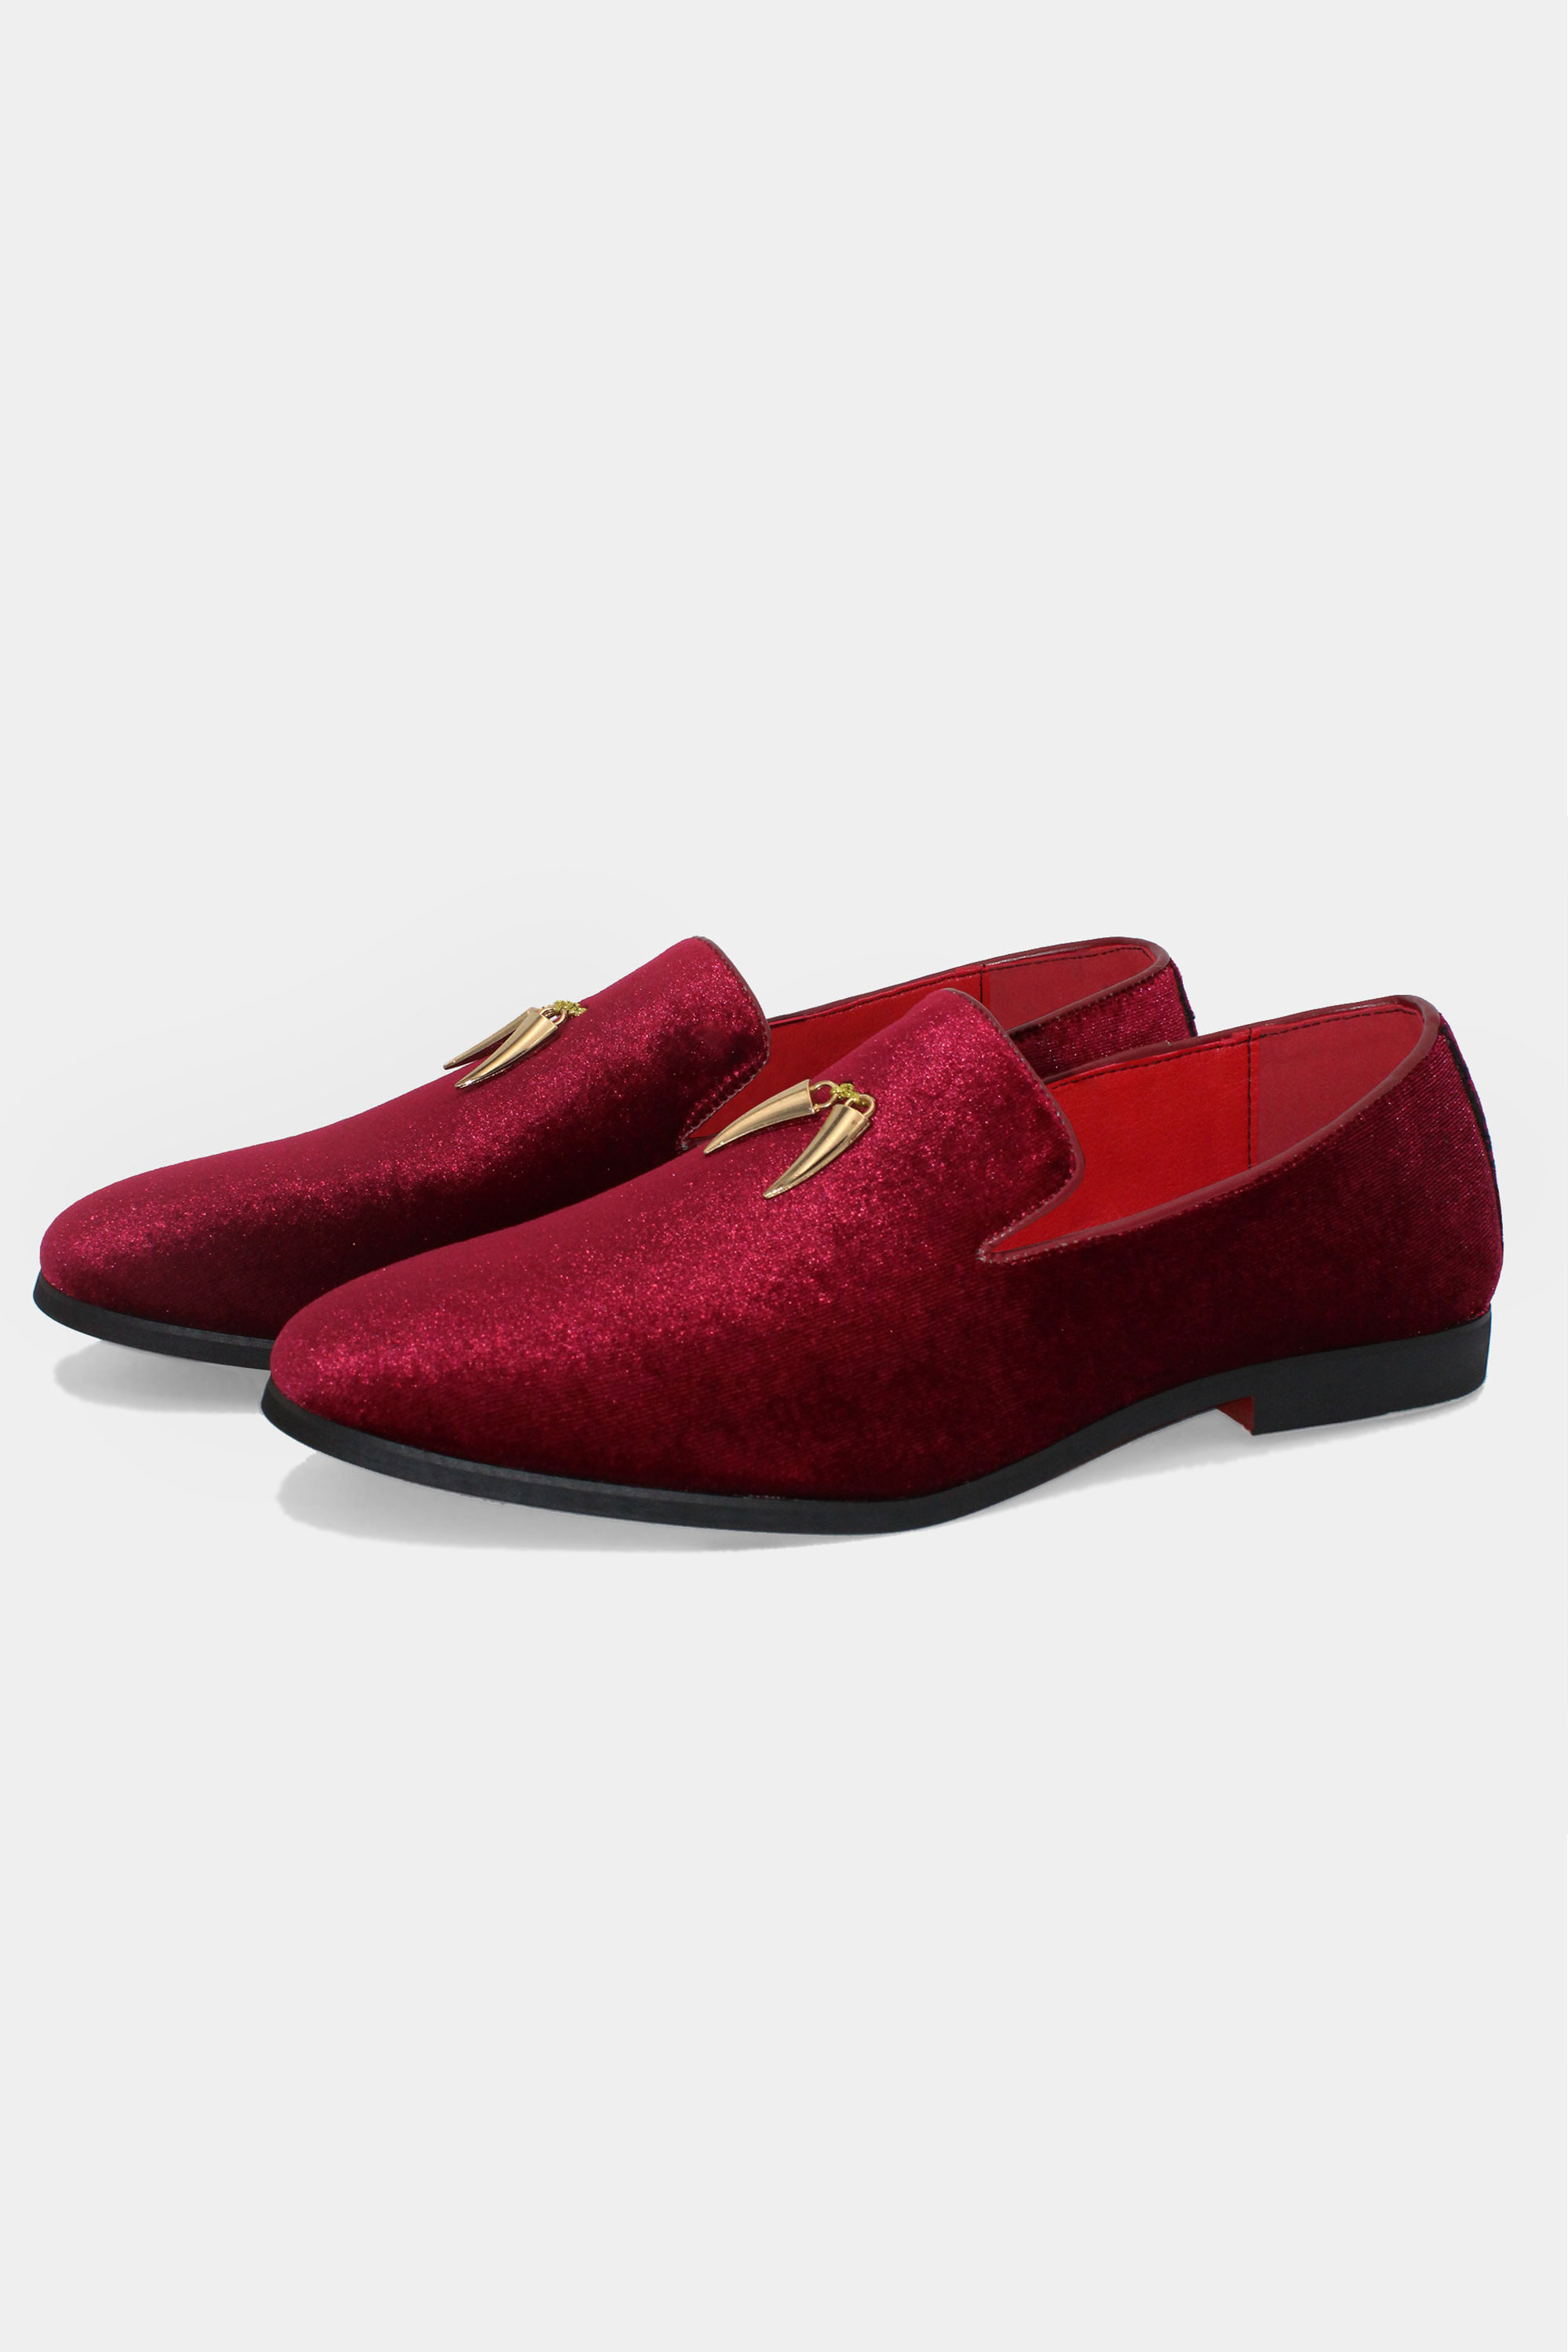 LOUBUTEN Luxury Brand Black Rhinestone Loafers Suede Leather Shoes Men  Wedding Shoes Flats Casual Gentlemen Dress Shoes